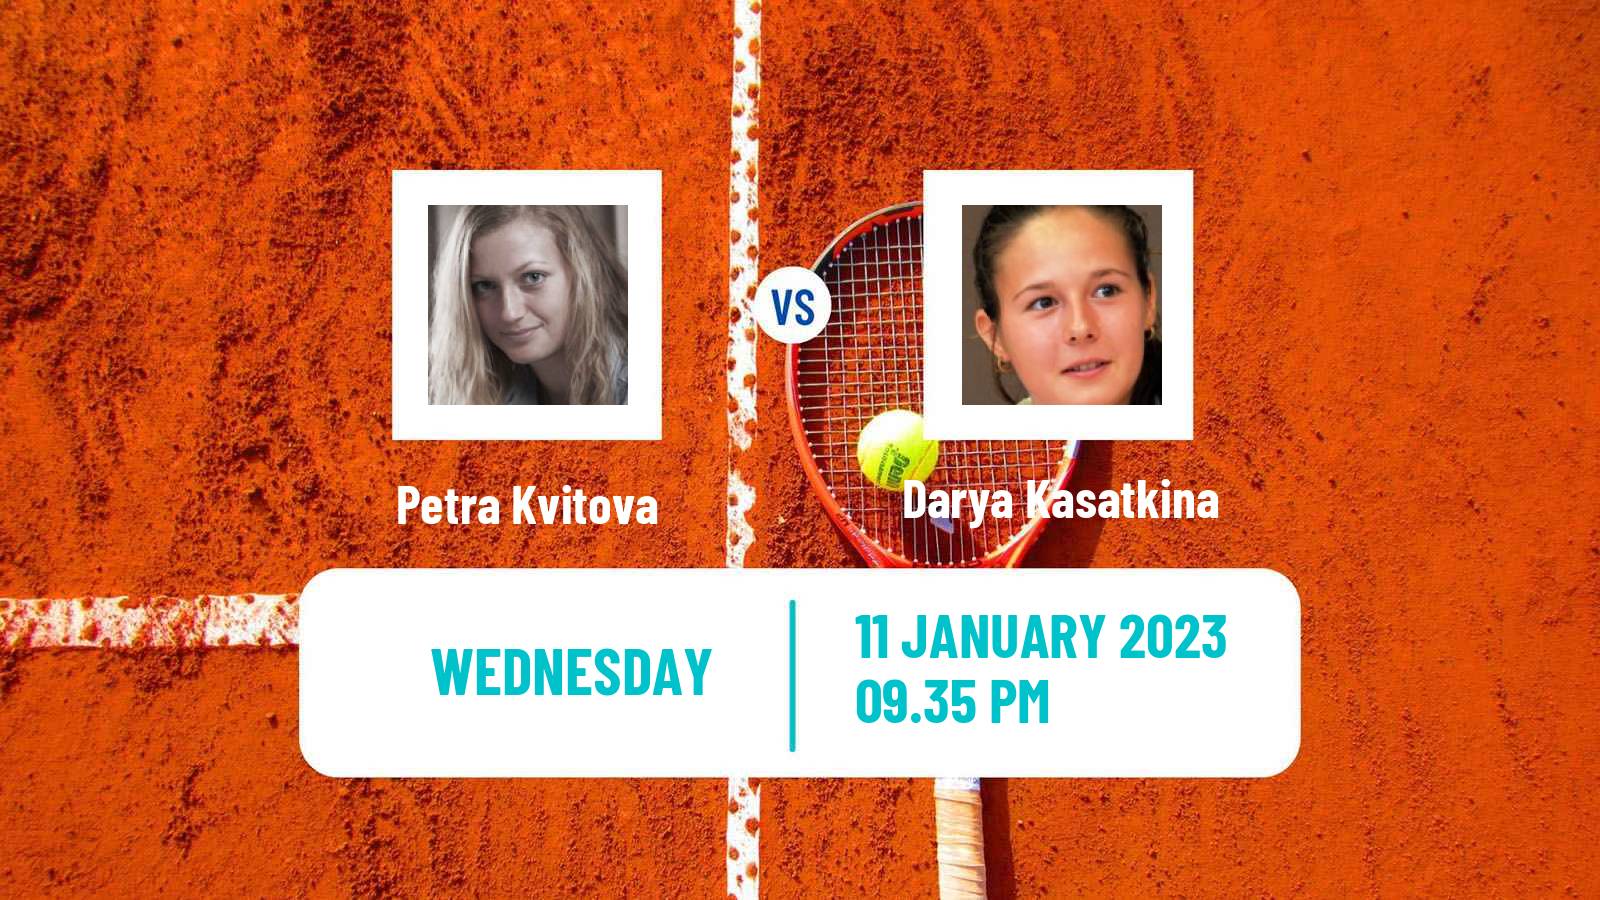 Tennis WTA Adelaide 2 Petra Kvitova - Darya Kasatkina